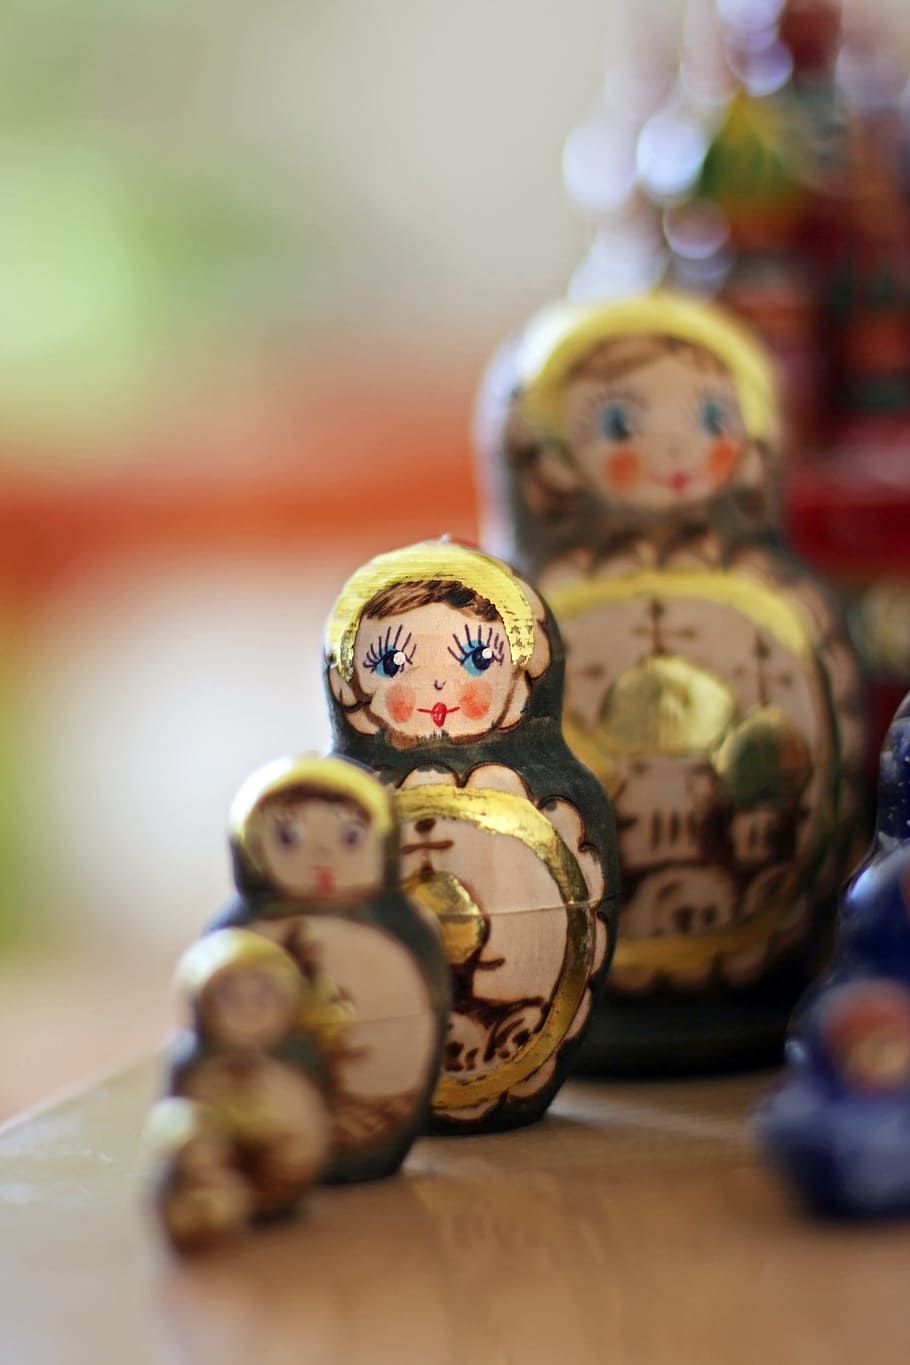 Matryoshka, Dolls, Russian, Nesting, matrioshka, traditional, toy, souvenir, culture, craft